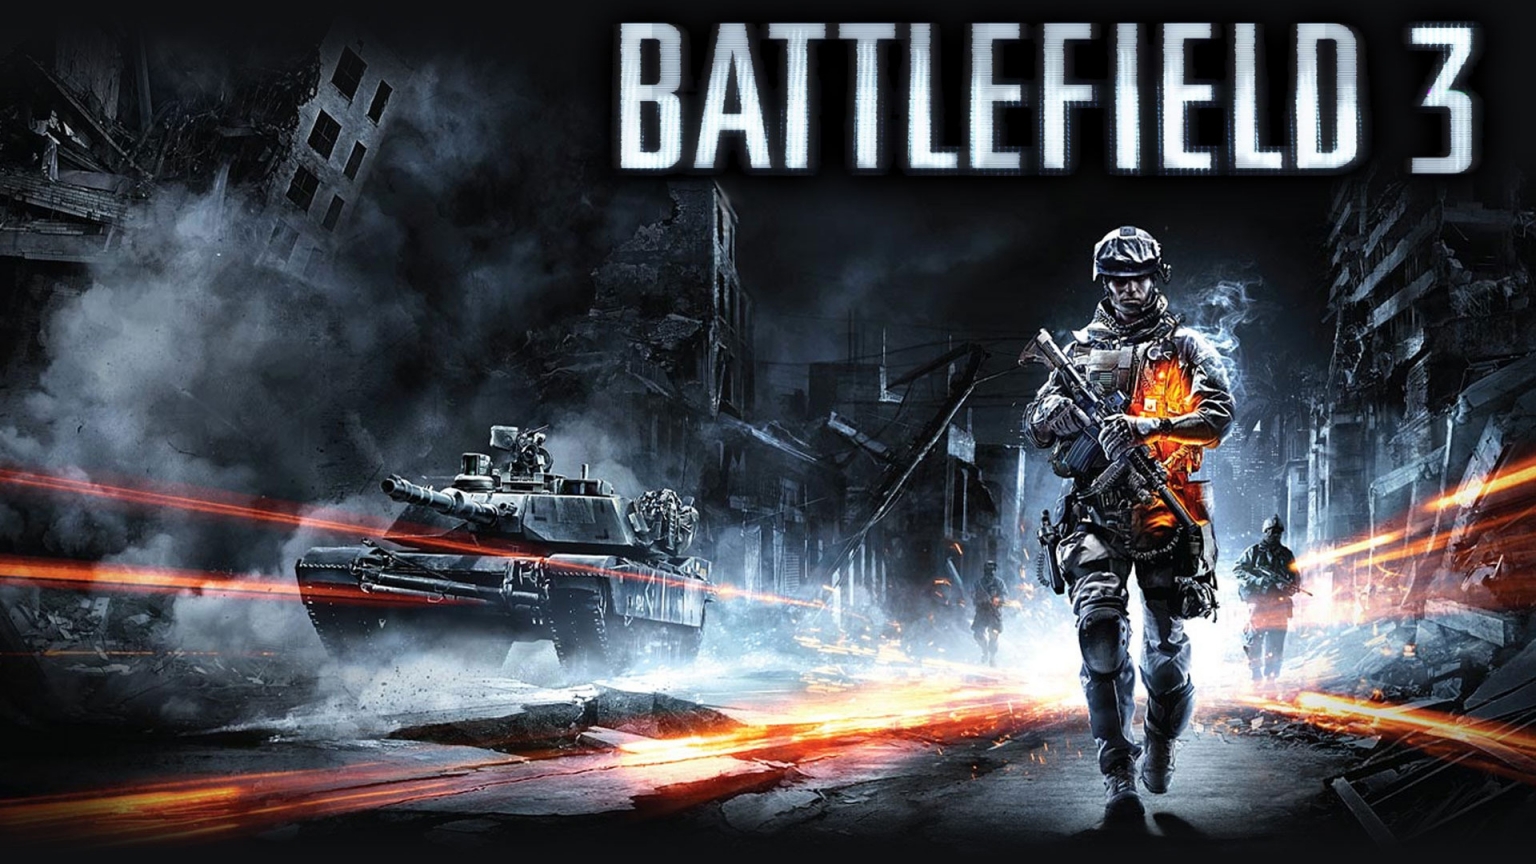 Battlefield 3 for 1536 x 864 HDTV resolution